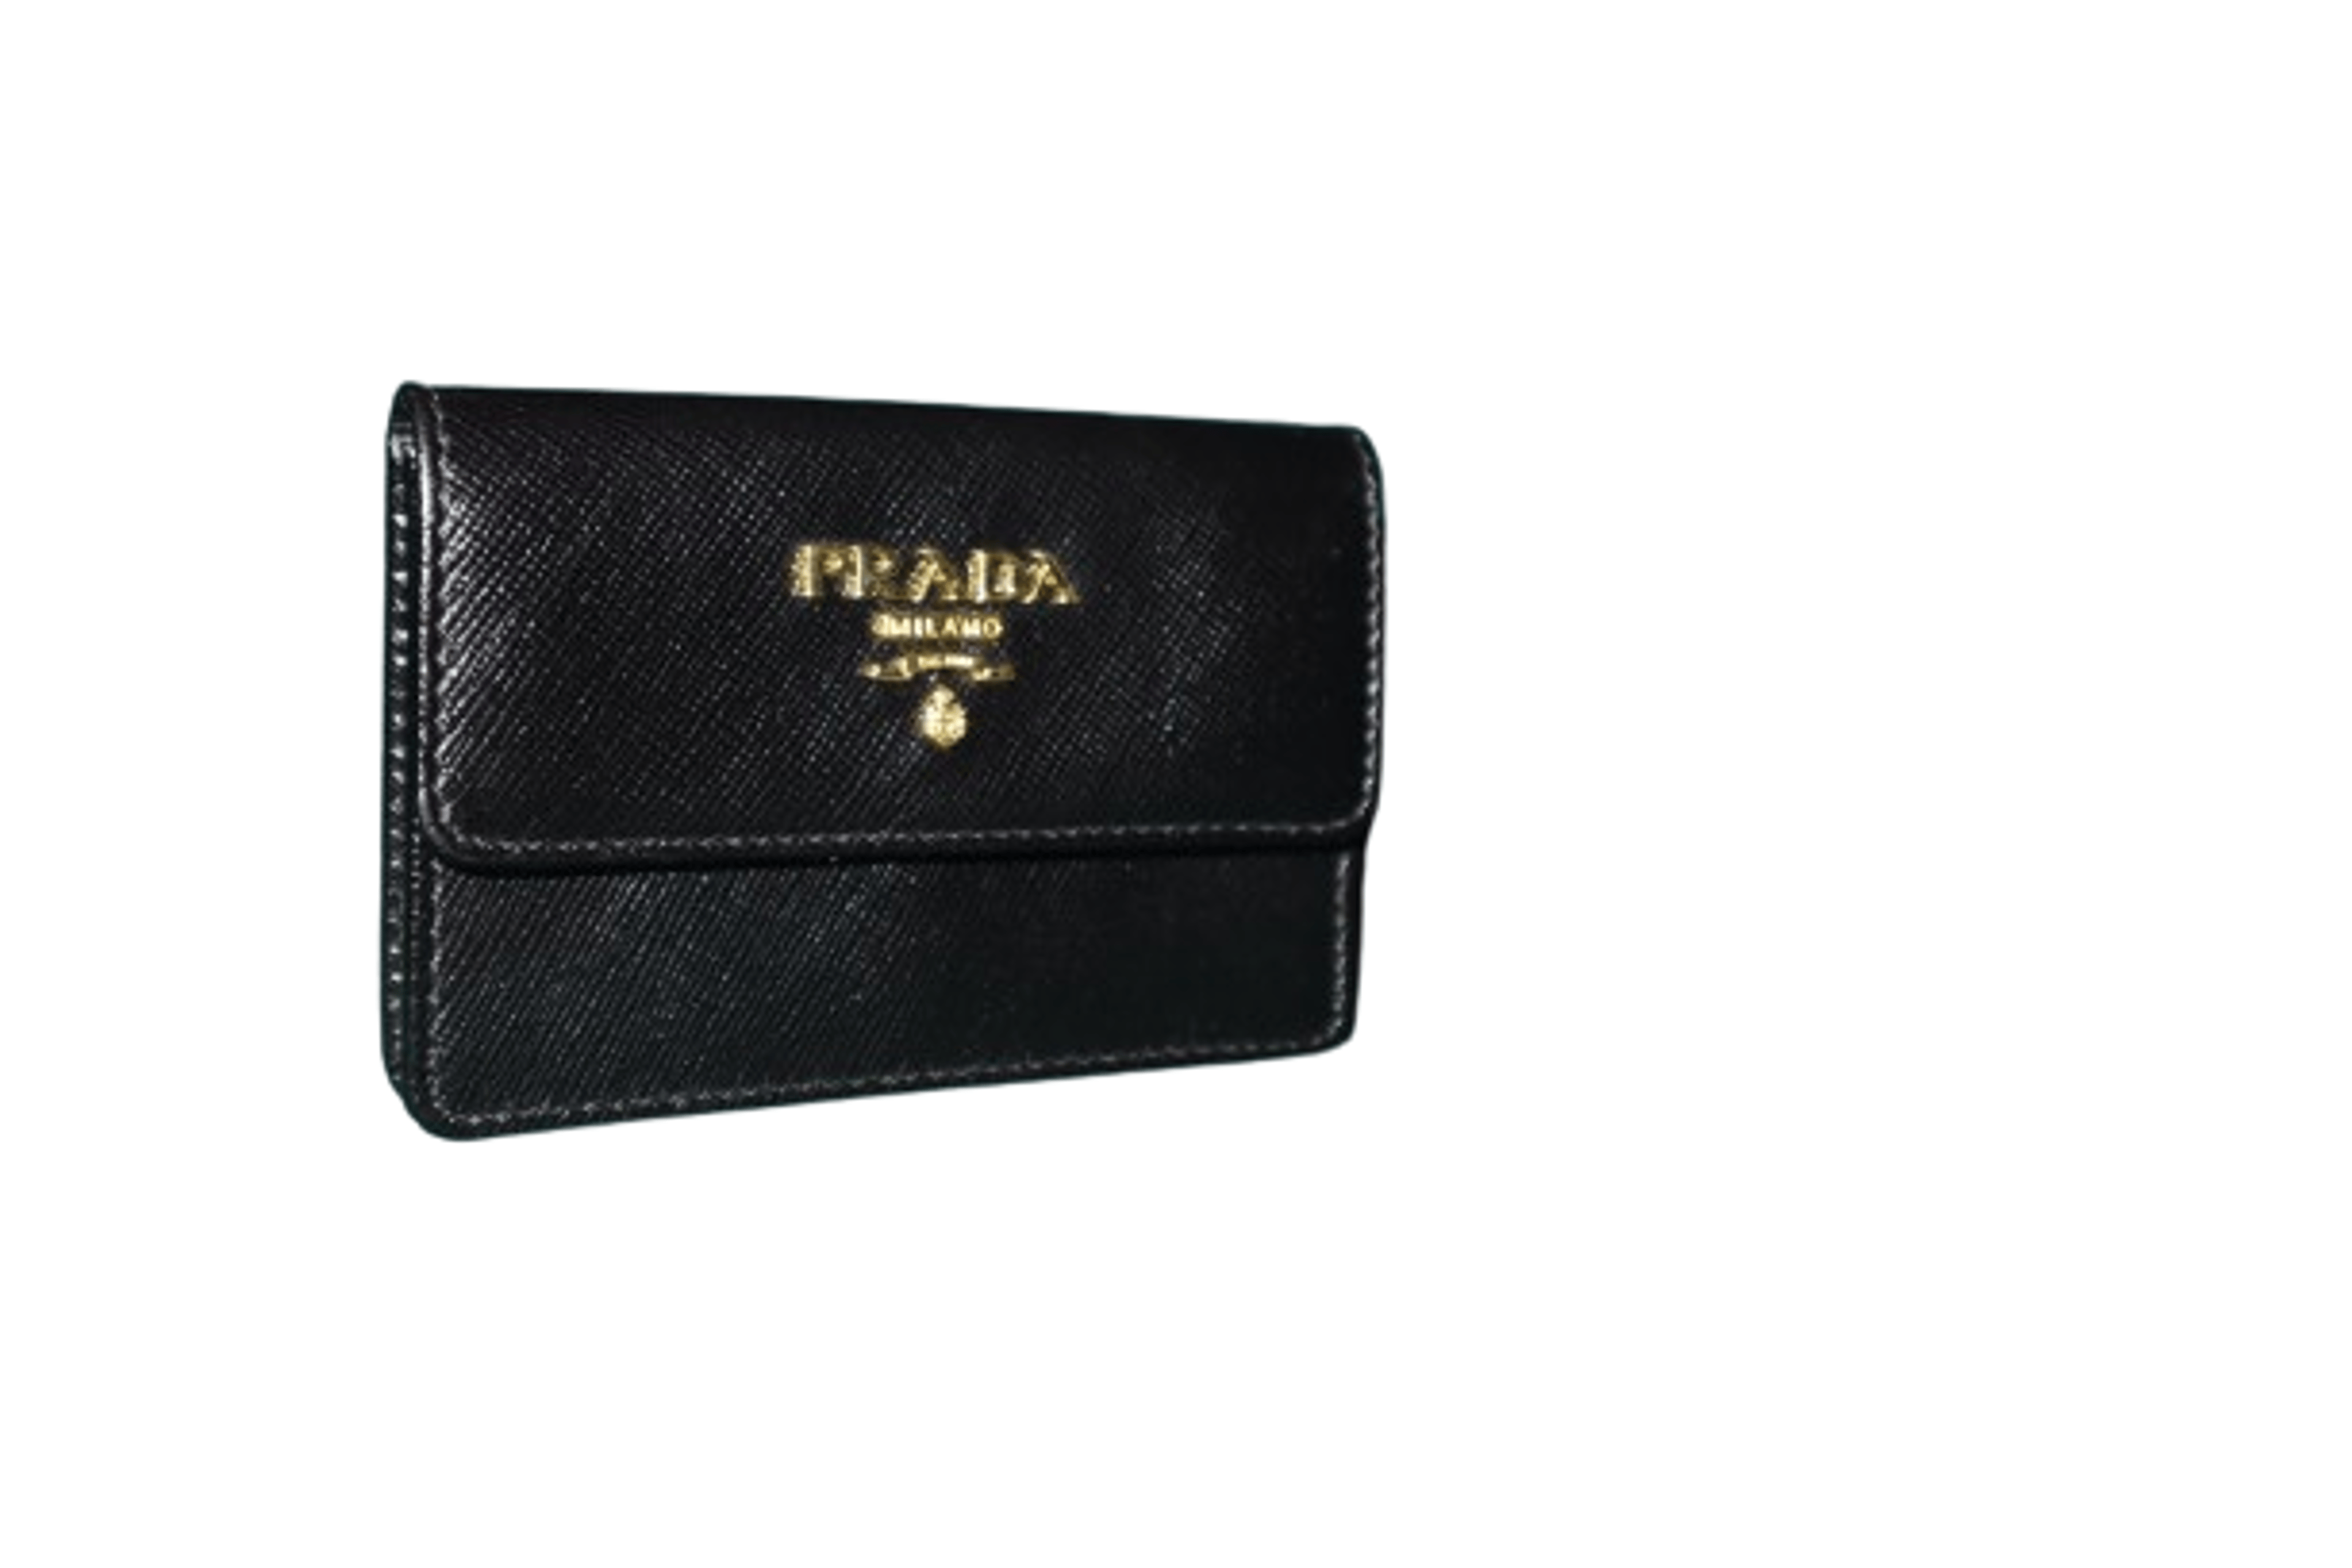 Alternate View 7 of Prada Black Saffiano Leather Flap Card Holder NEW